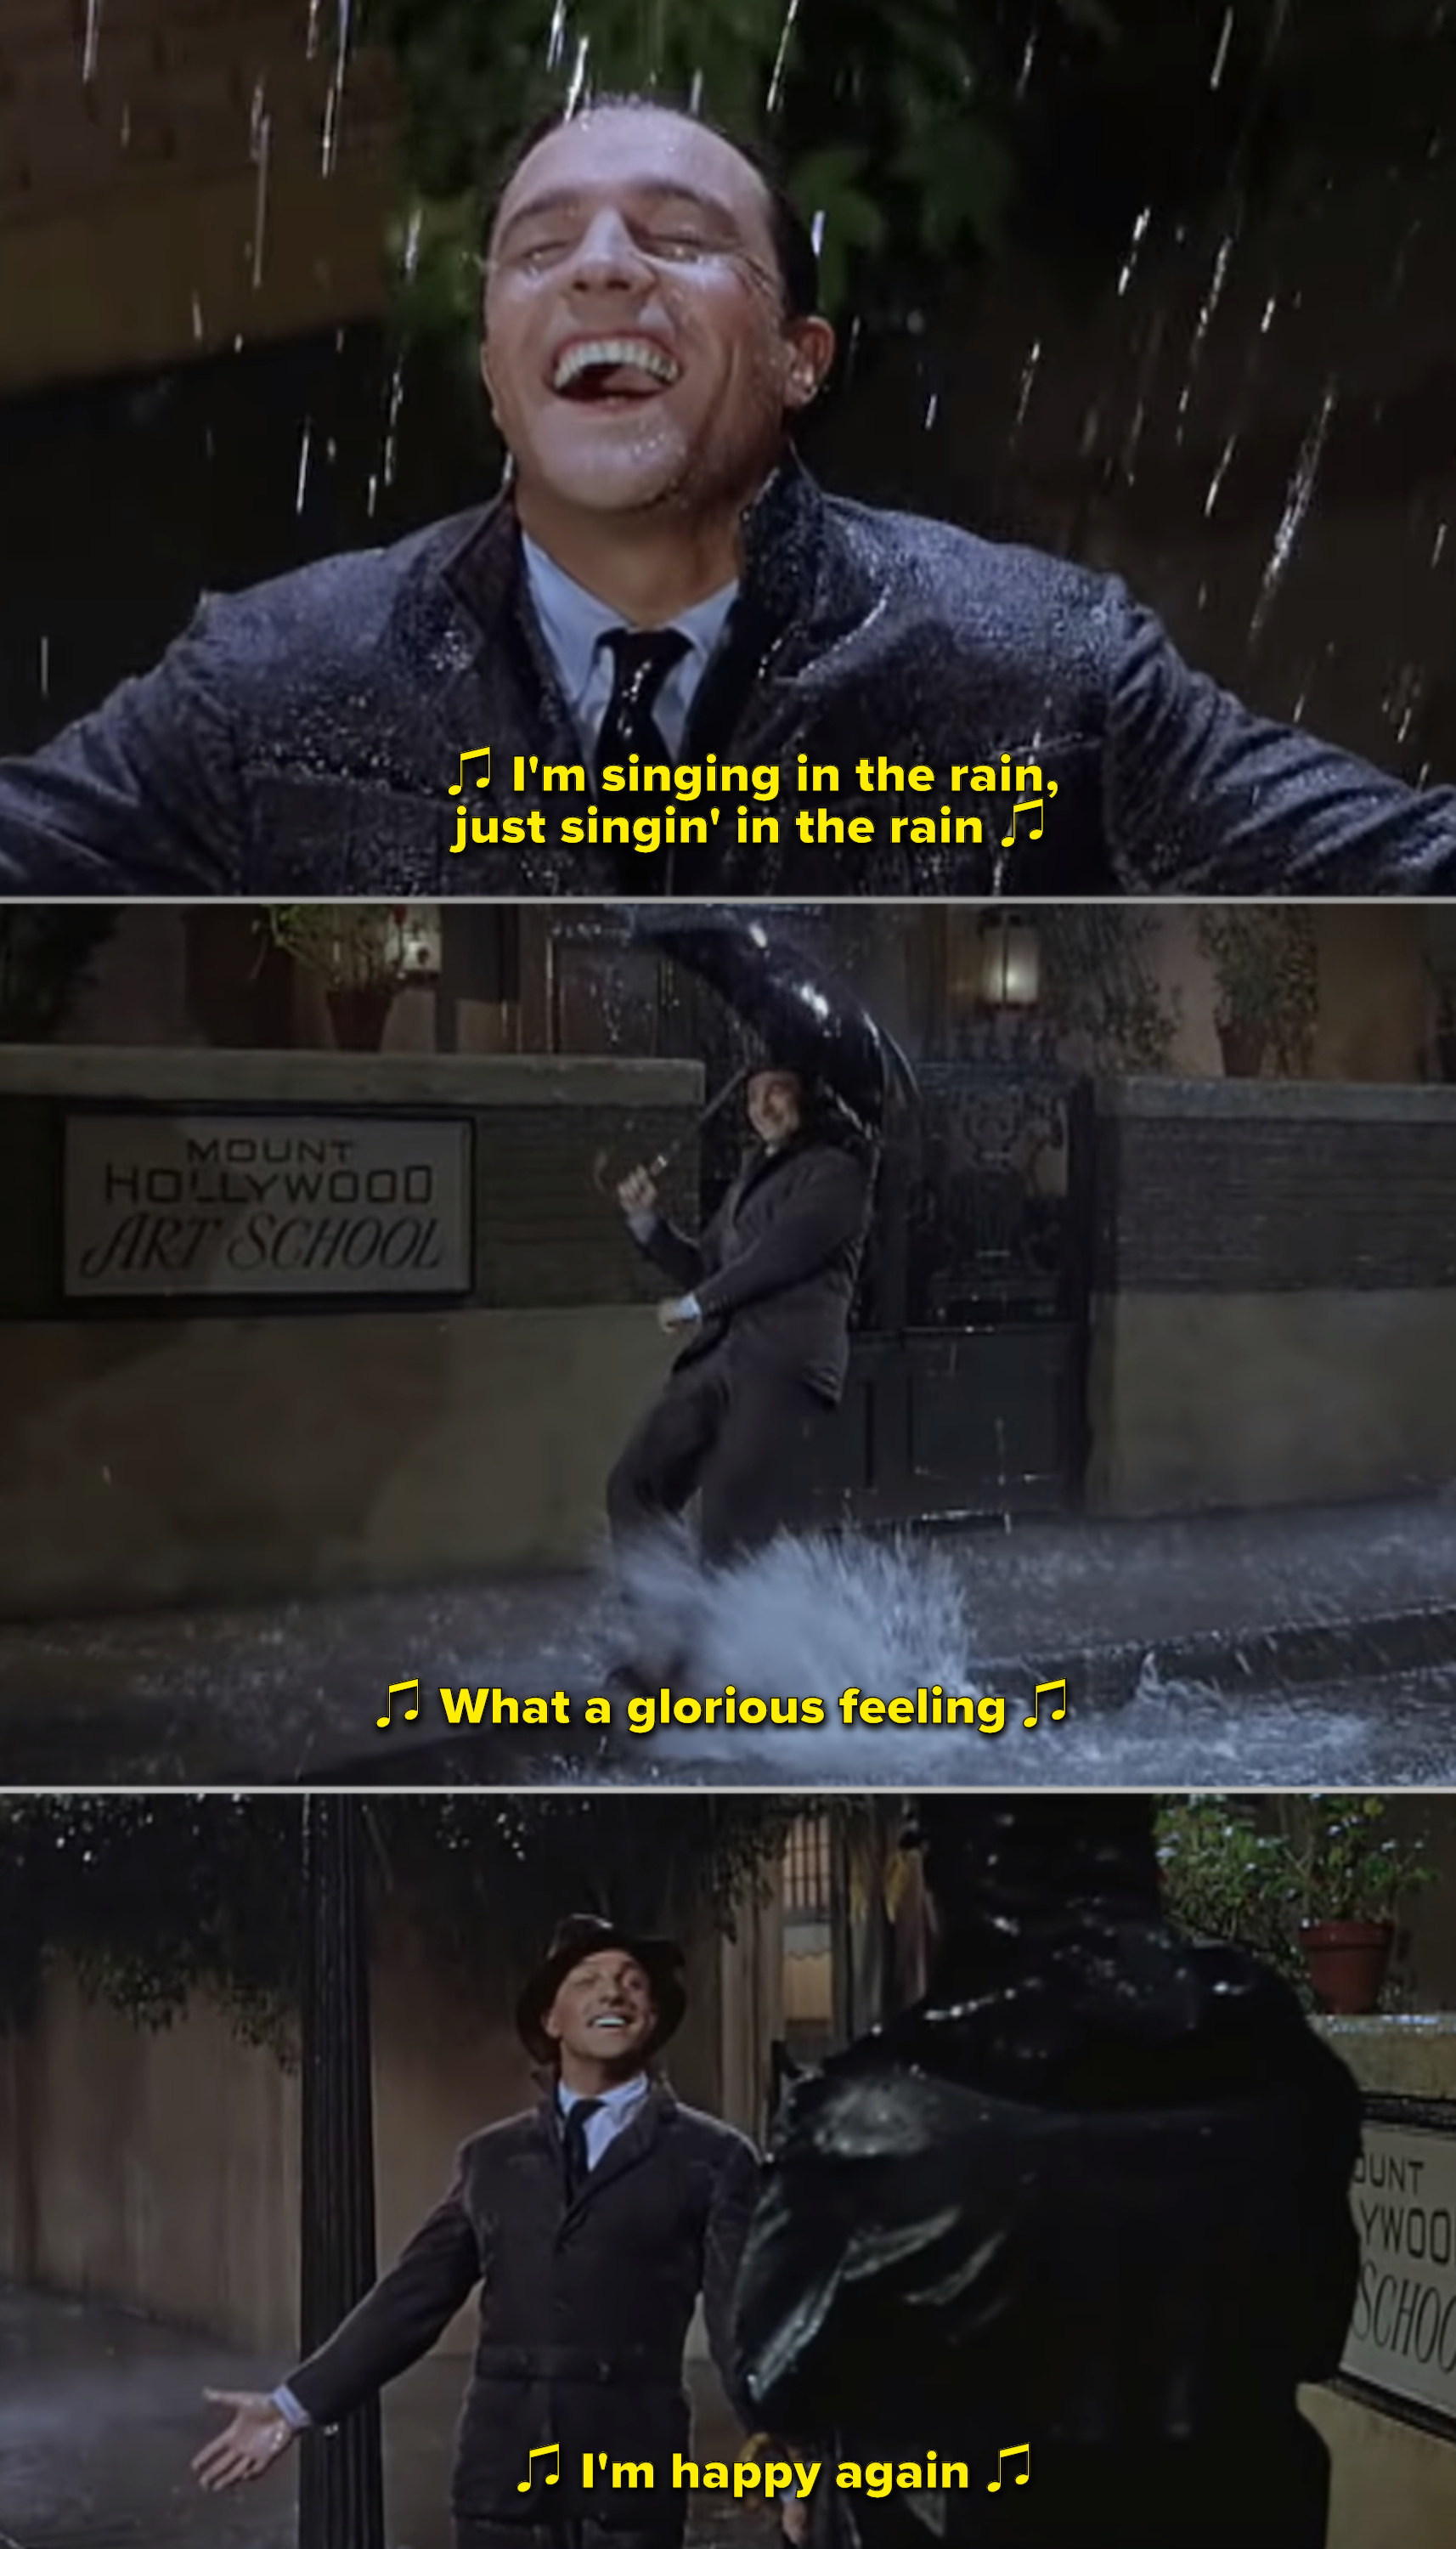 Don singing in the rain